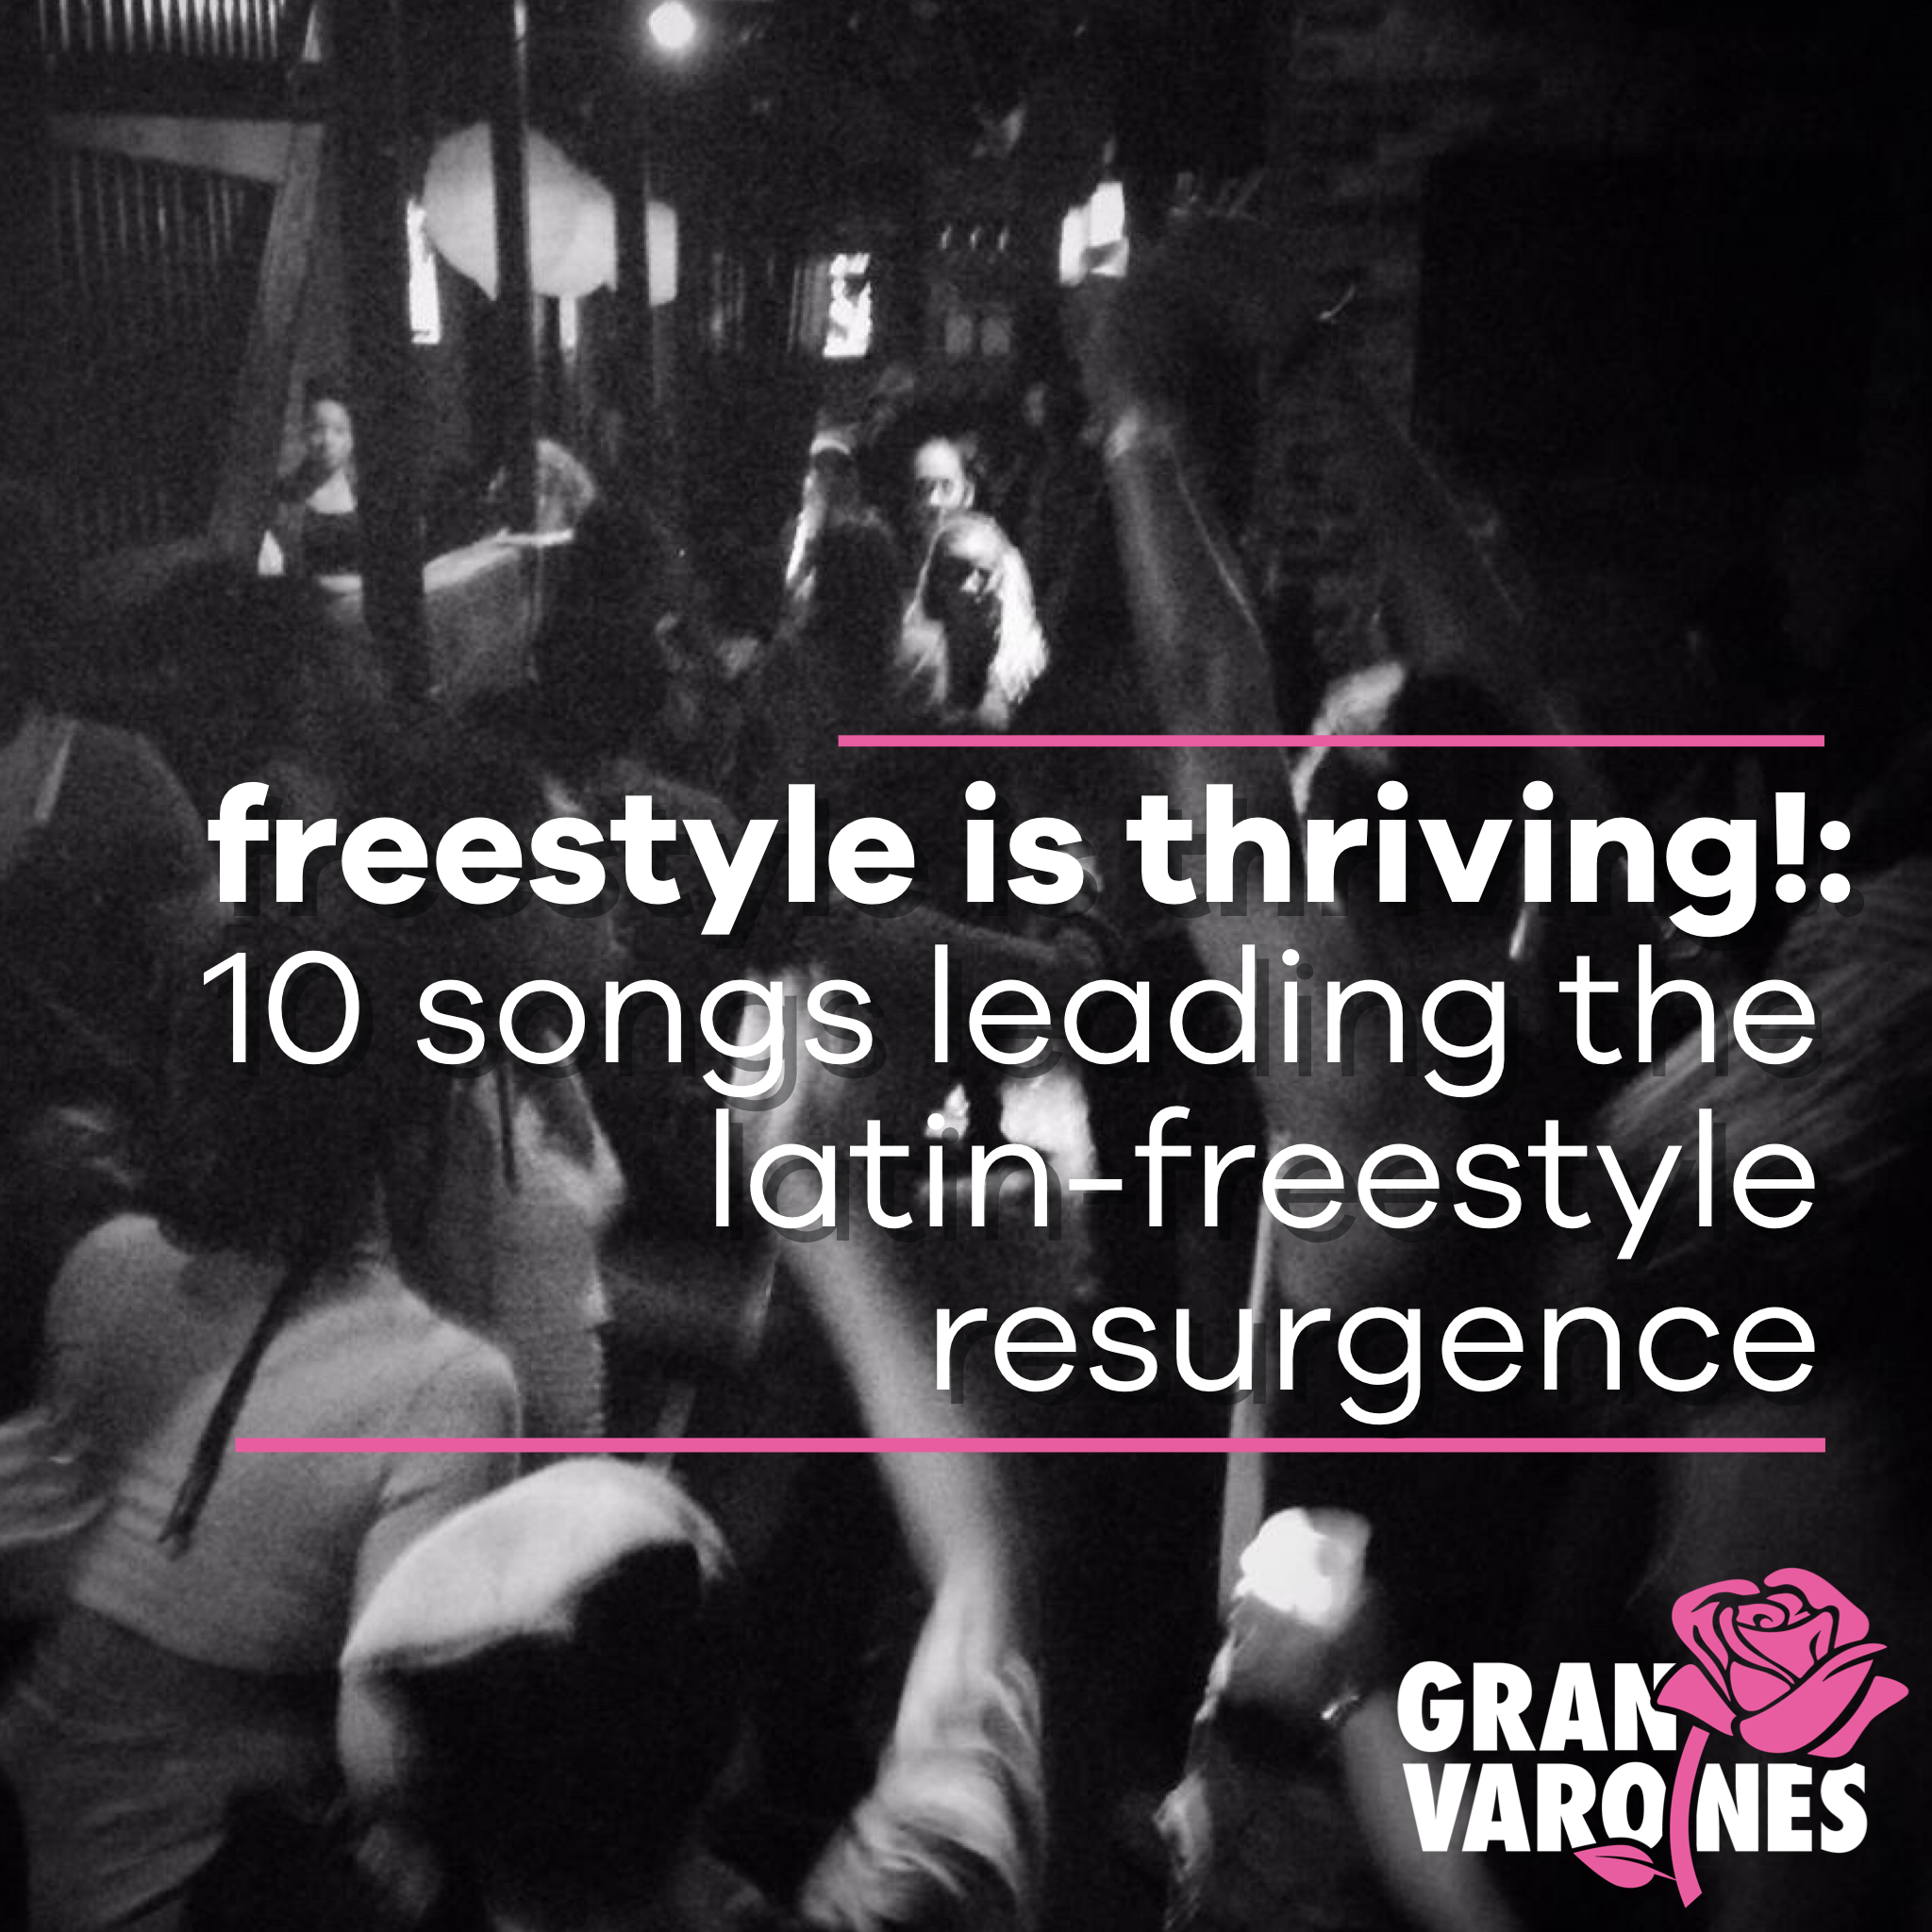 10 Songs Leading the Latin-Freestyle Resurgence